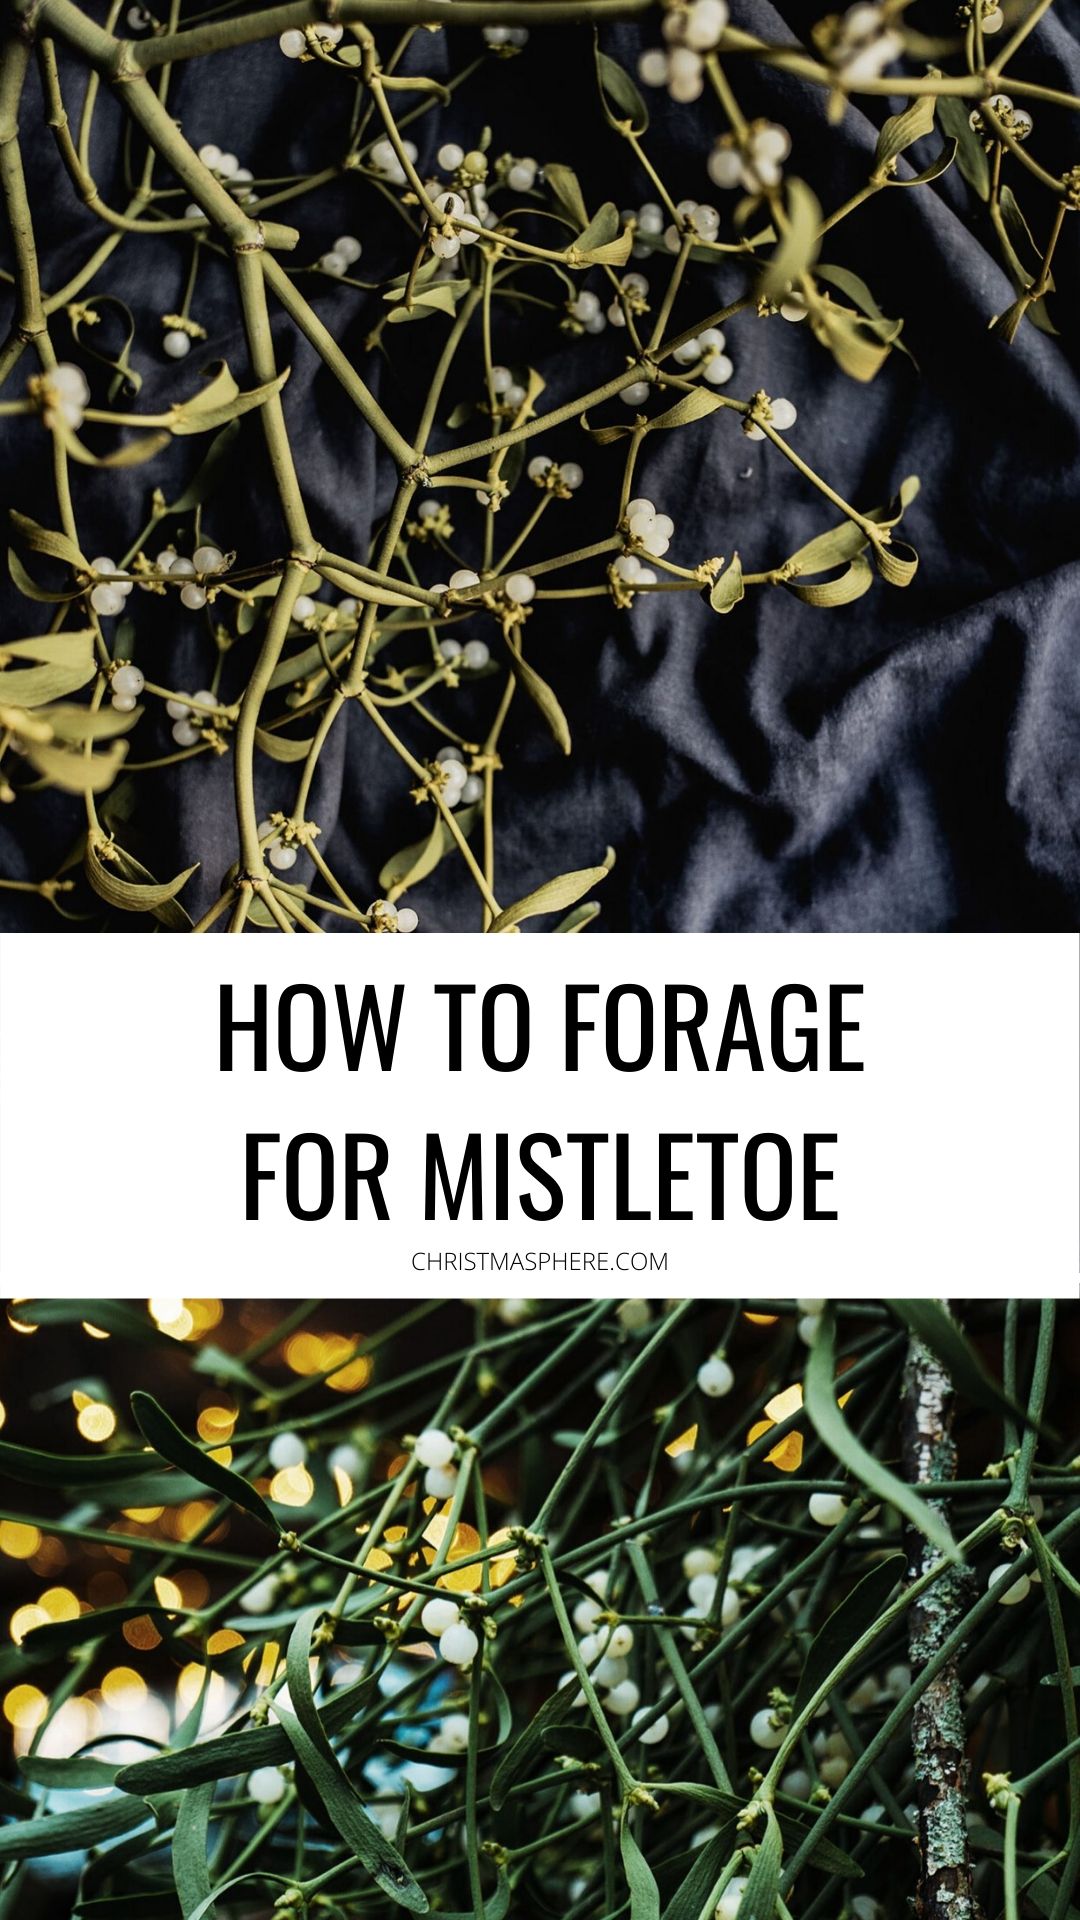 Forage for mistletoe